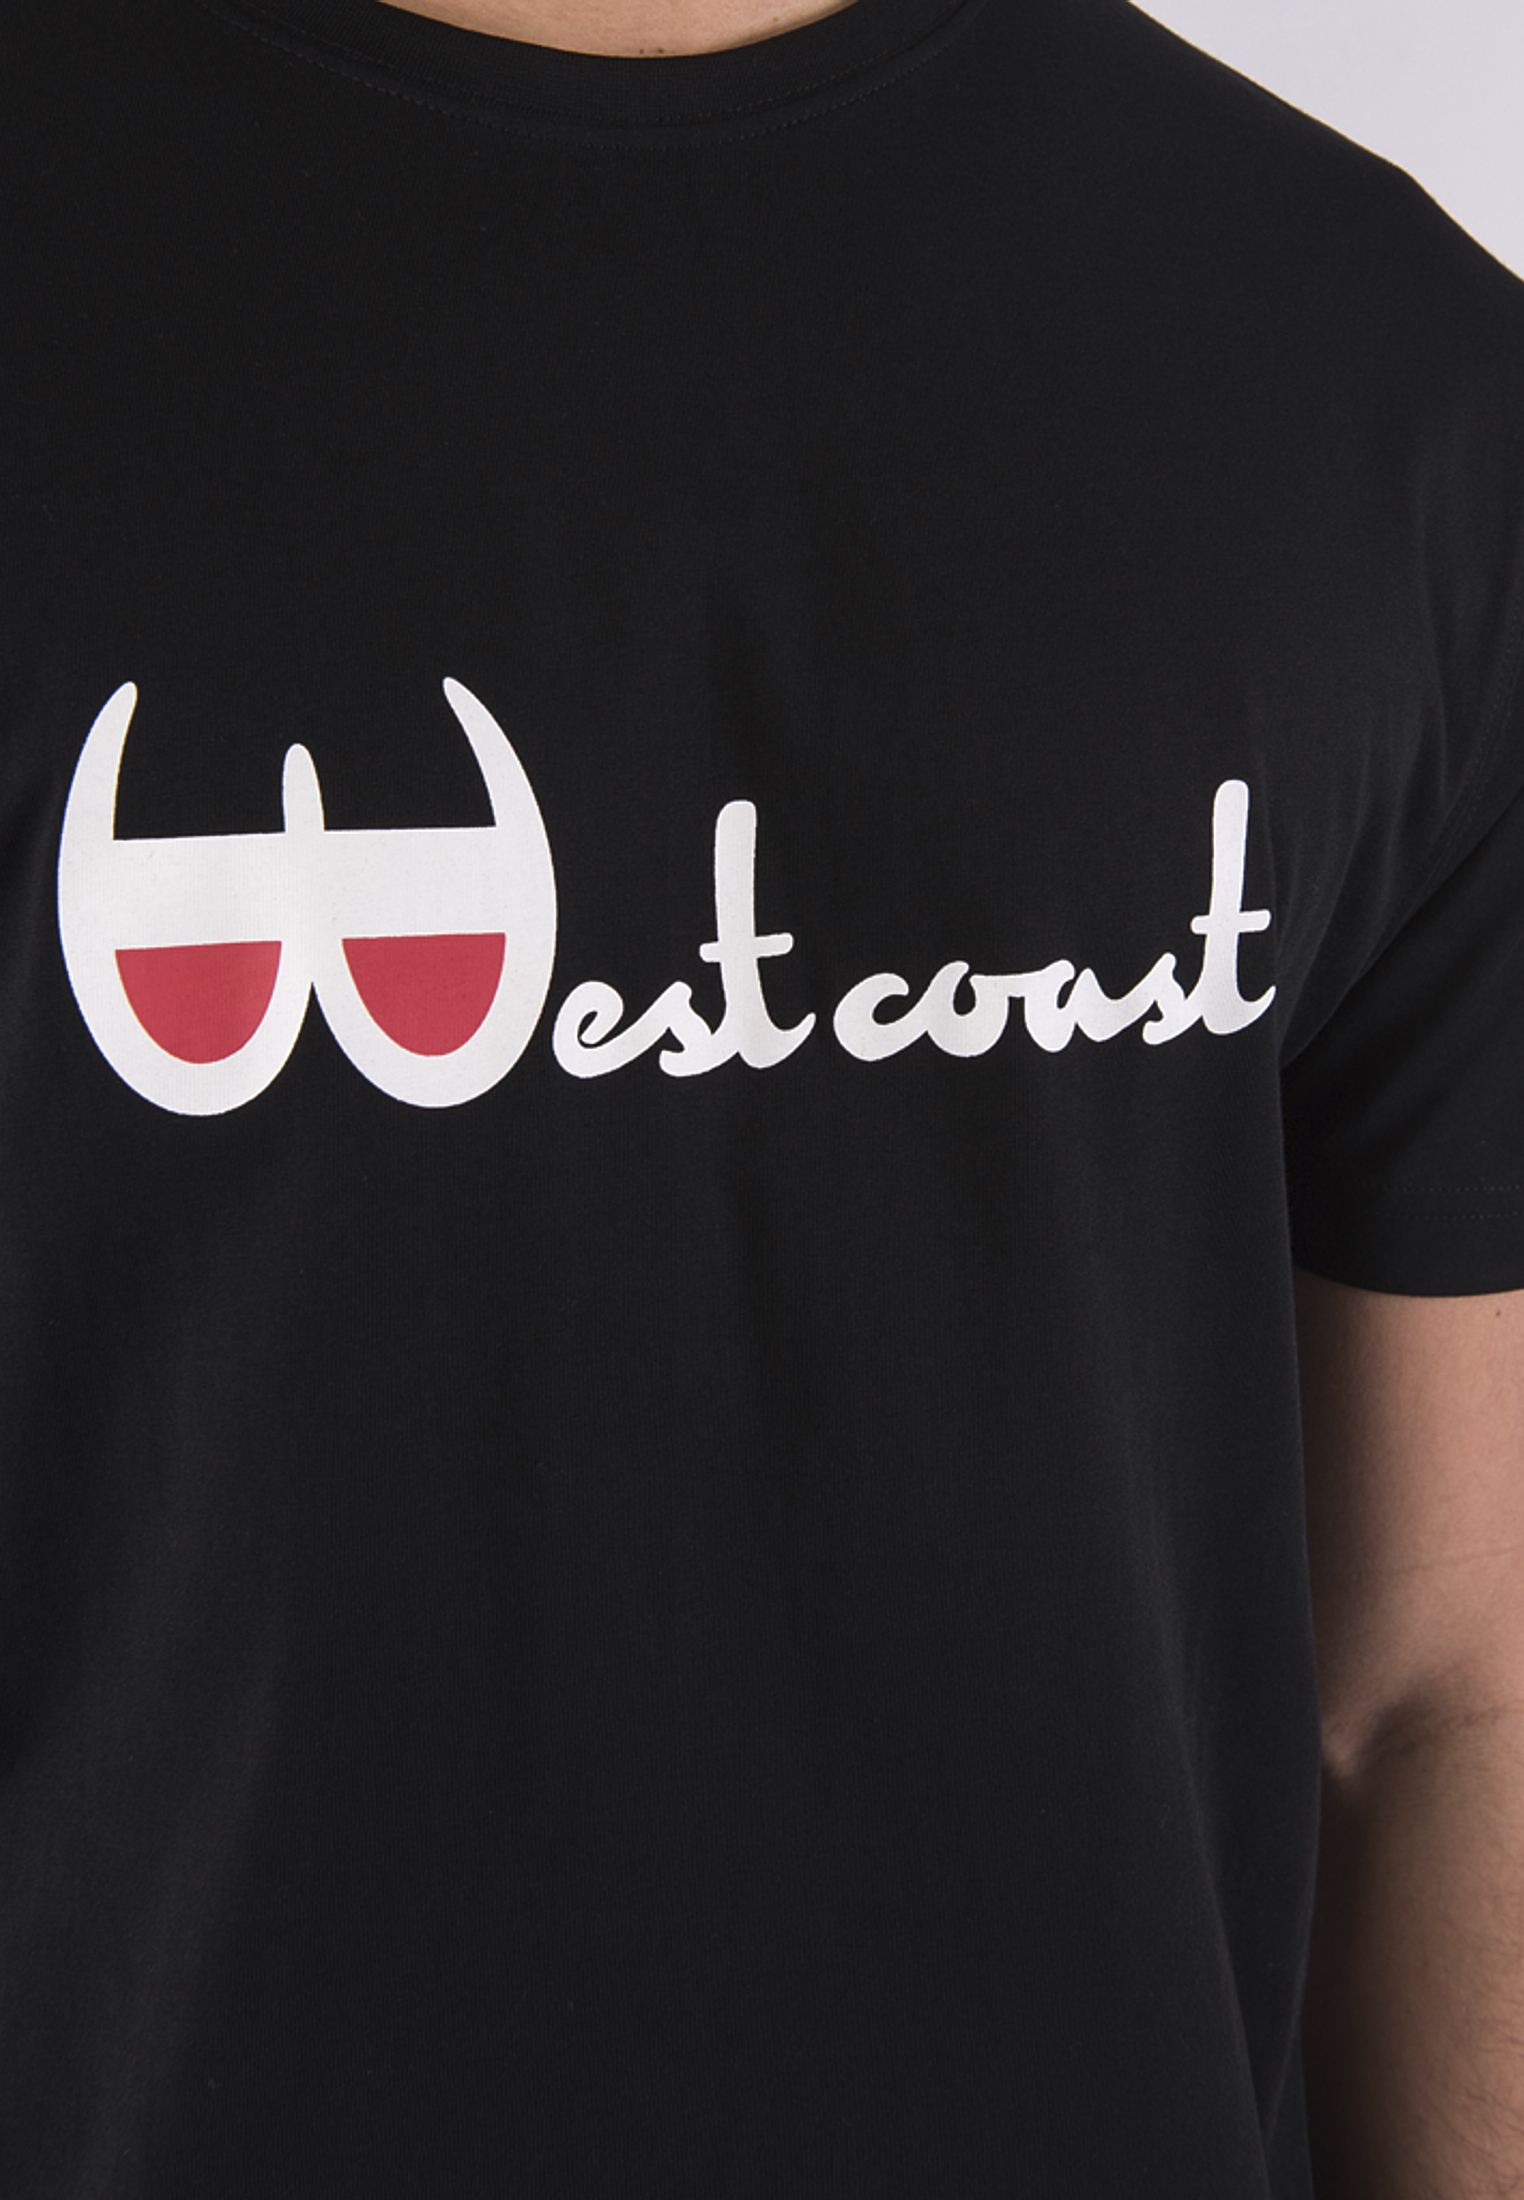 T-Shirts C&S WL Westcoast Tee in Farbe black/mc